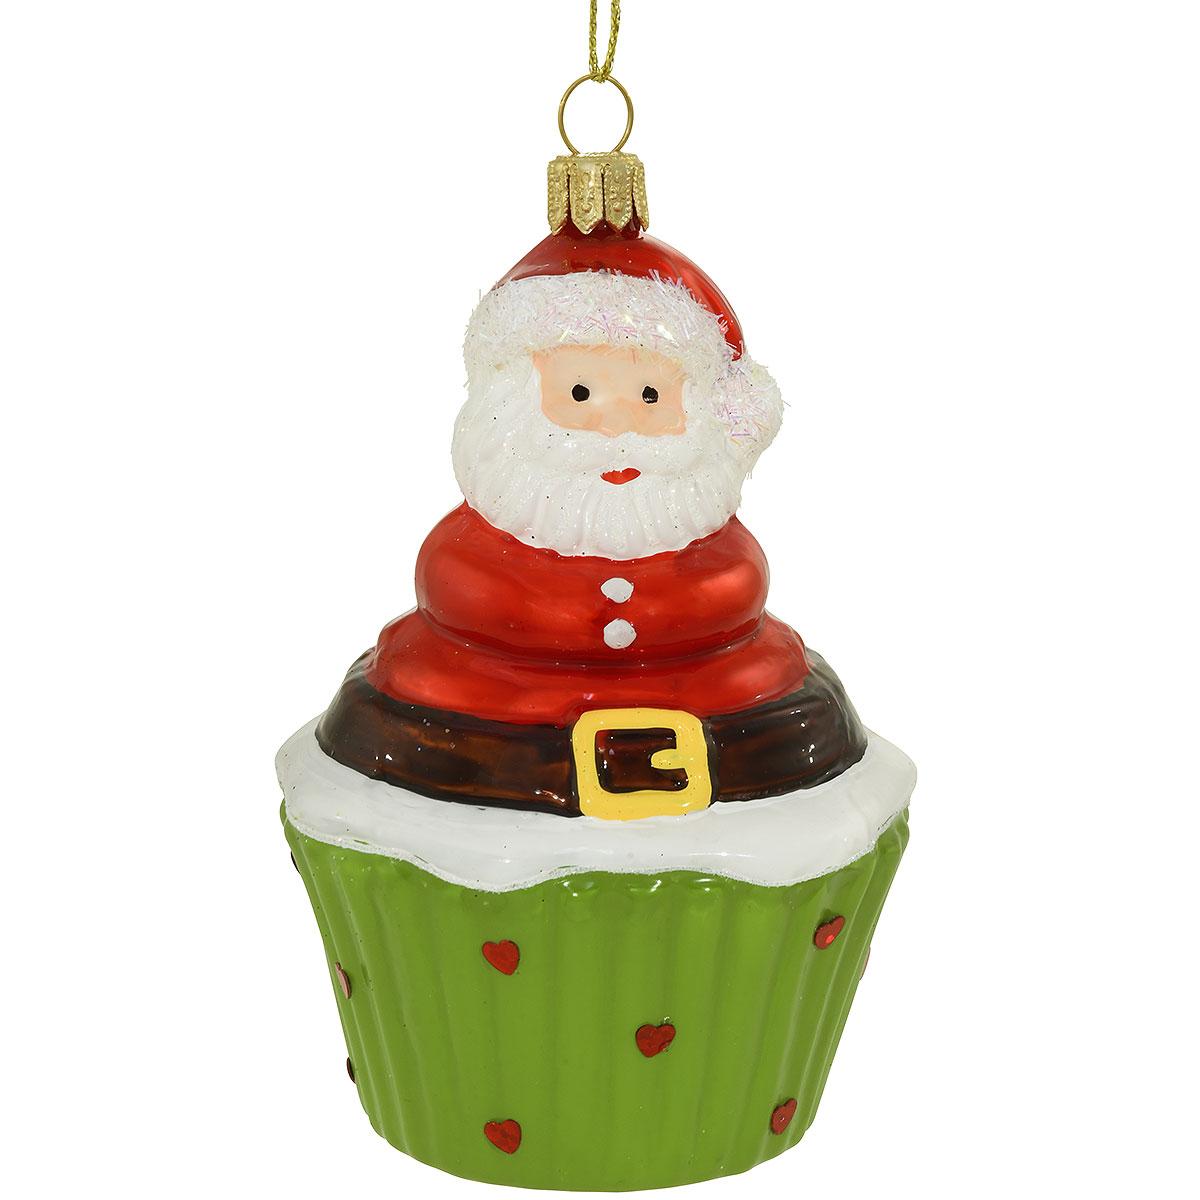 Cupcake With Santa Ornament